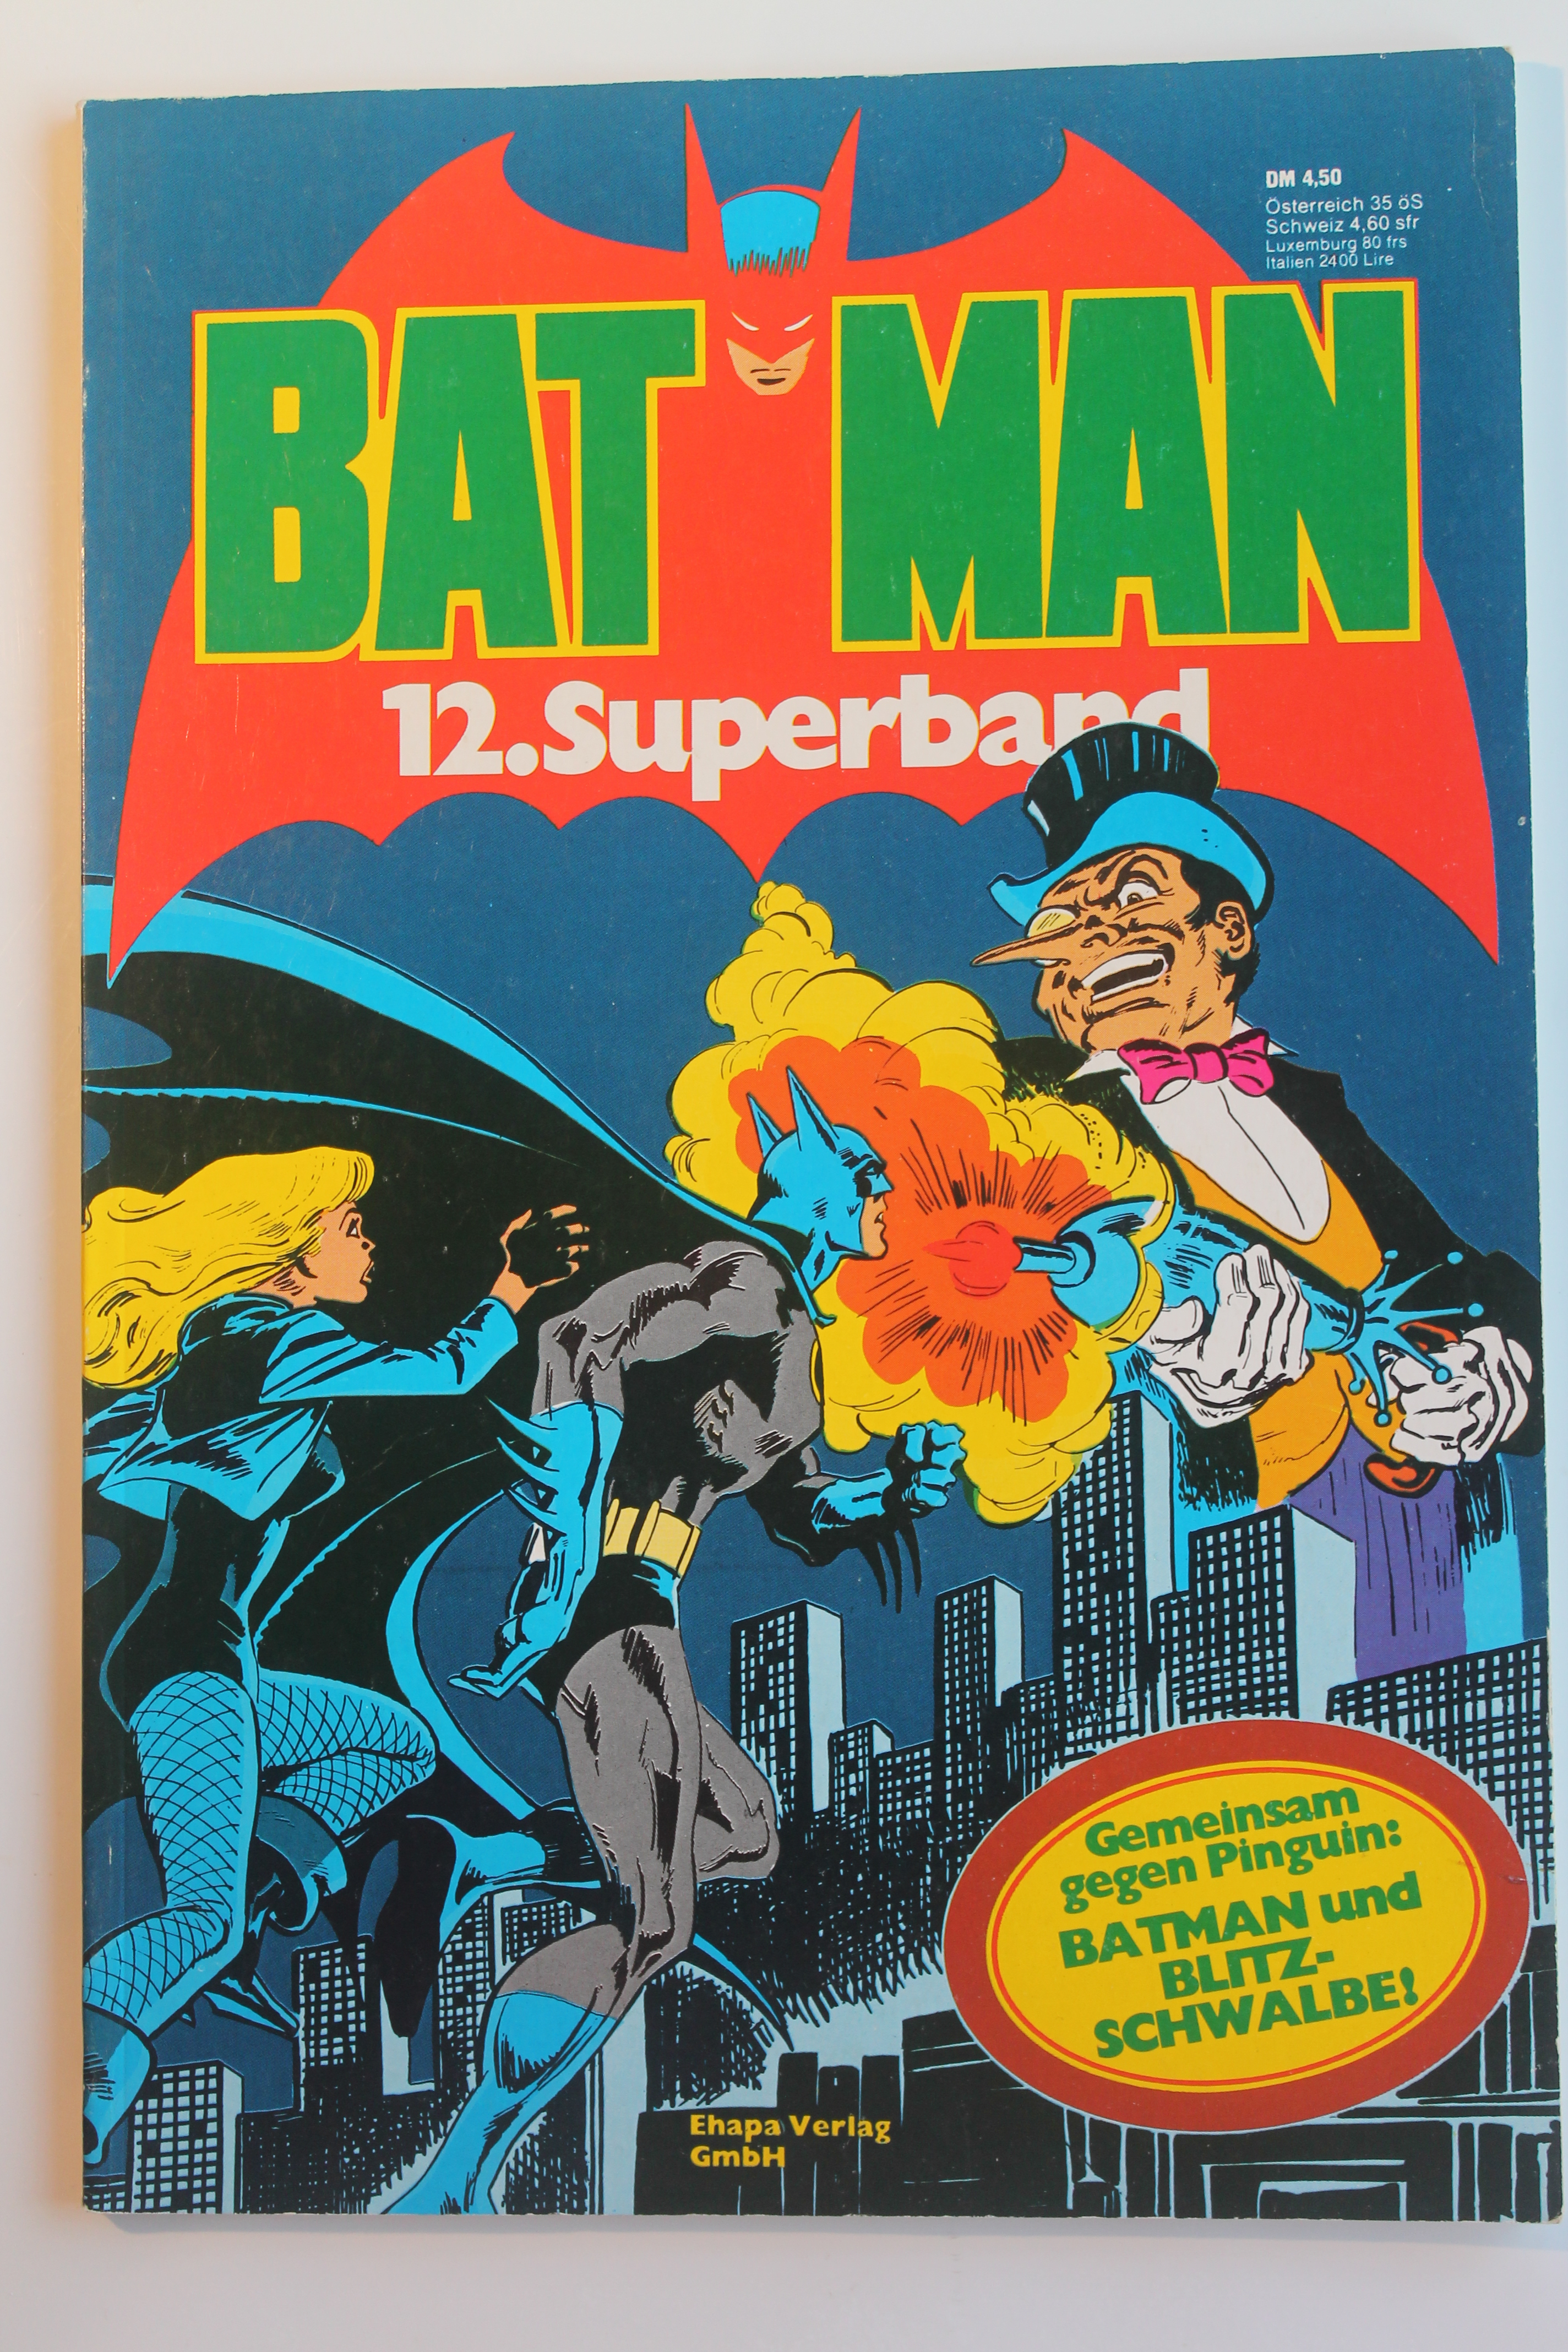 Batman superband 12